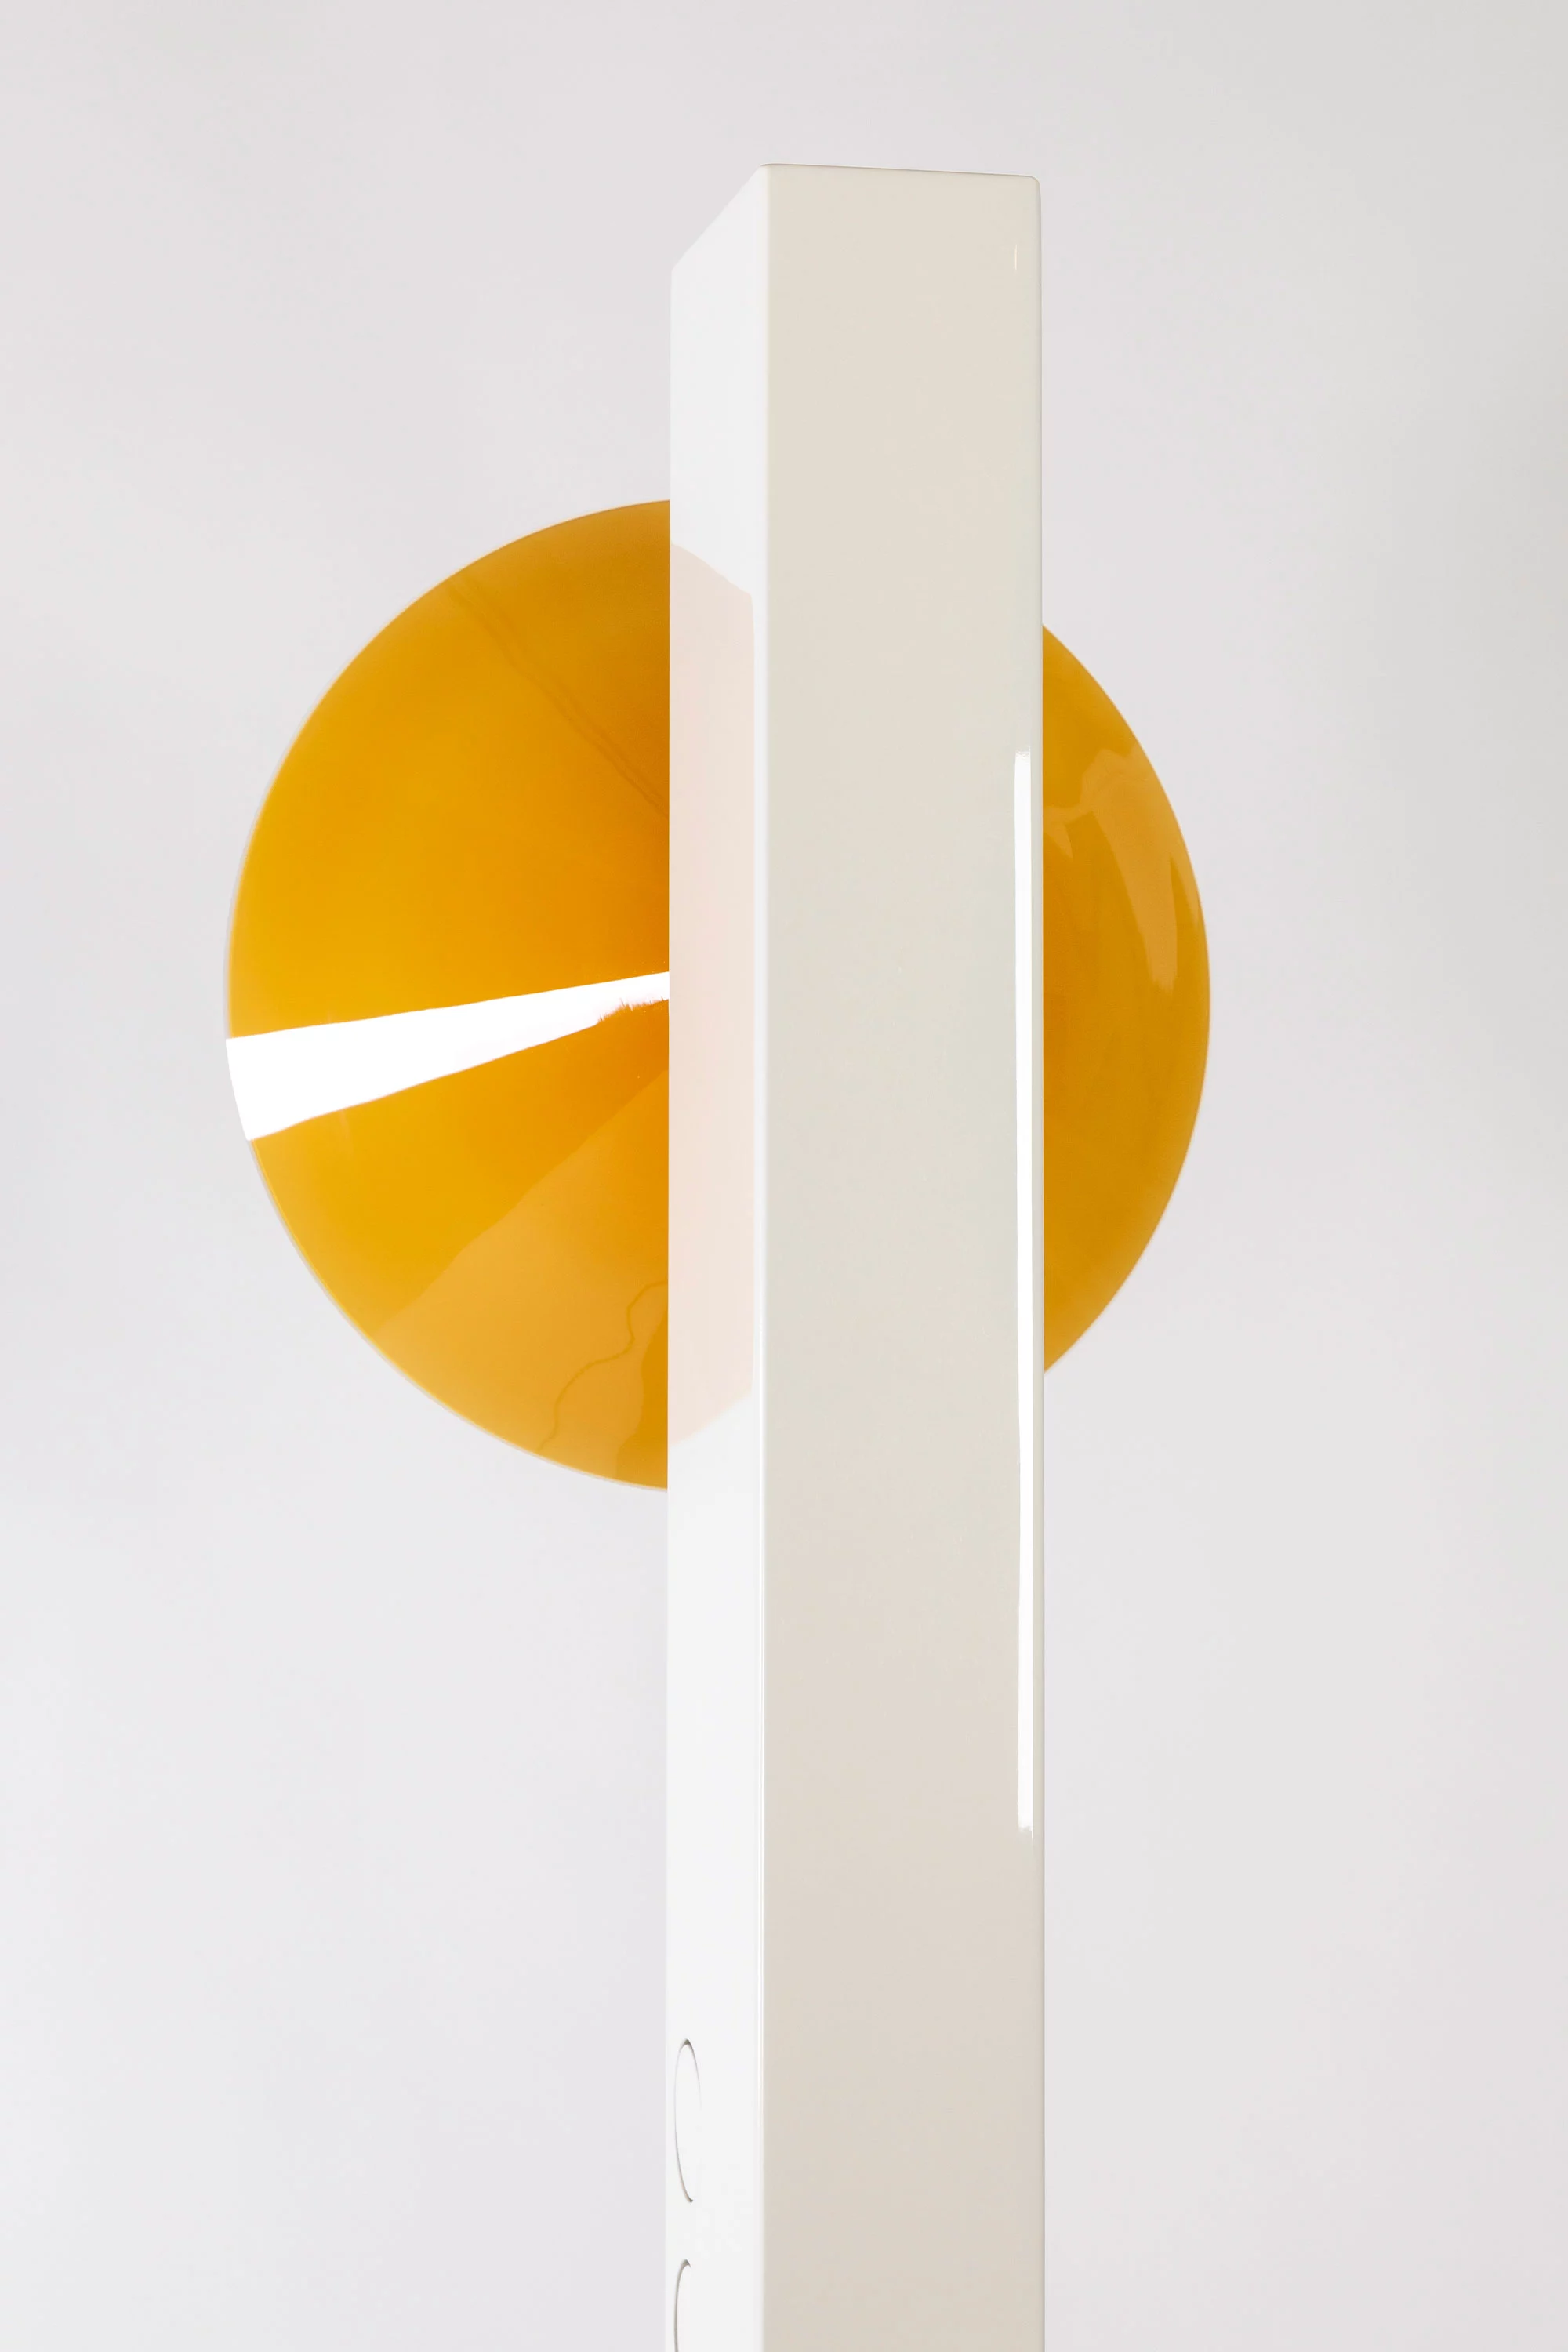 Signal F2 POLYCHROMATIC - Edward Barber & Jay Osgerby - Floor light - Galerie kreo